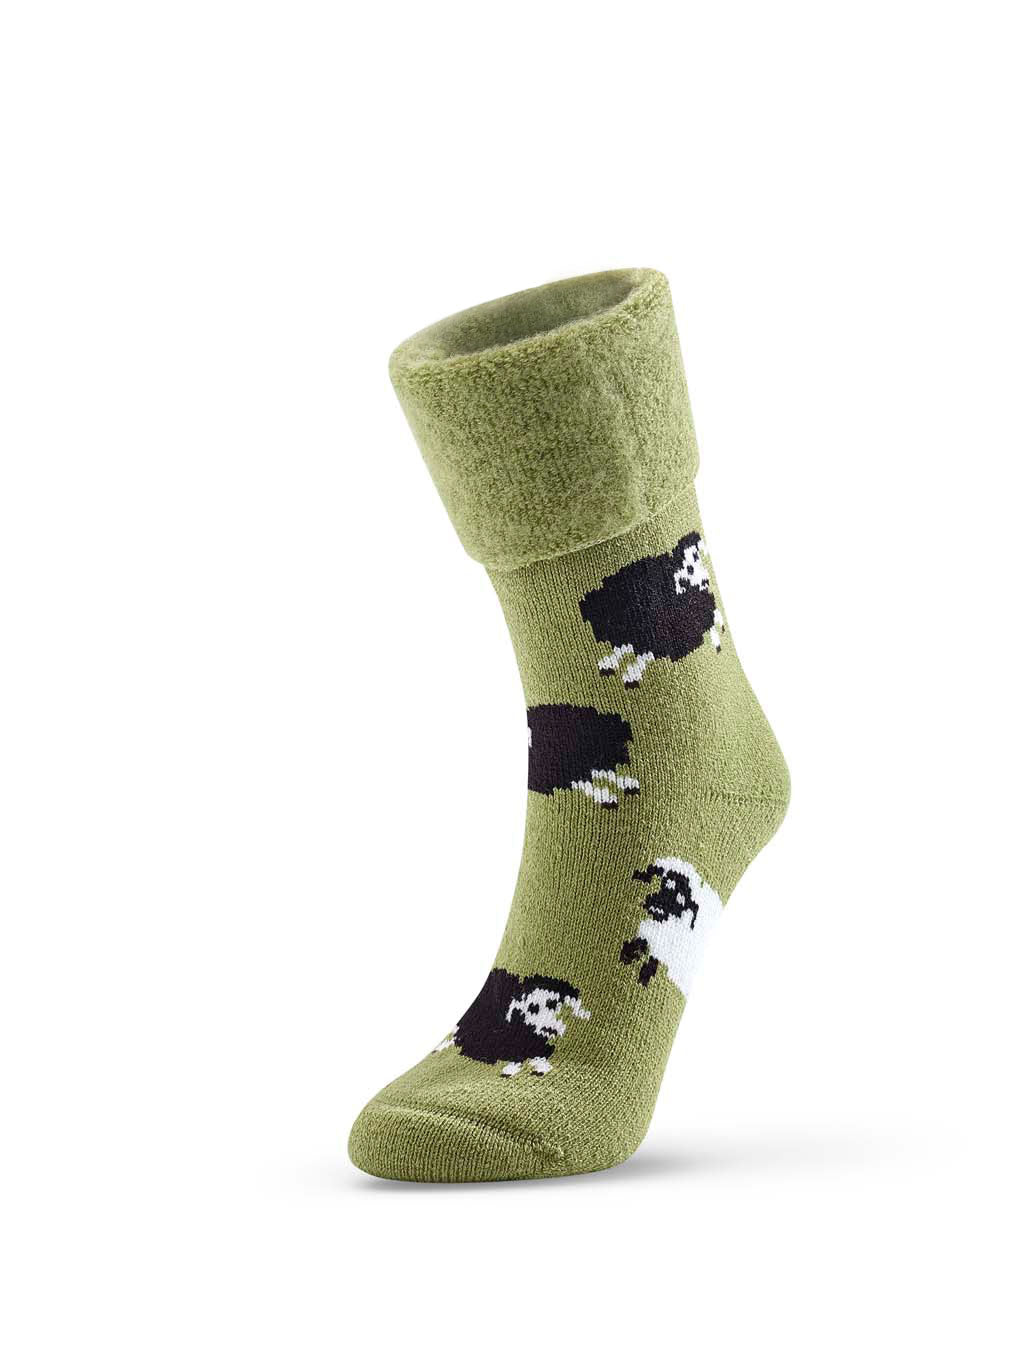 Sheep Bed Socks - Emerald